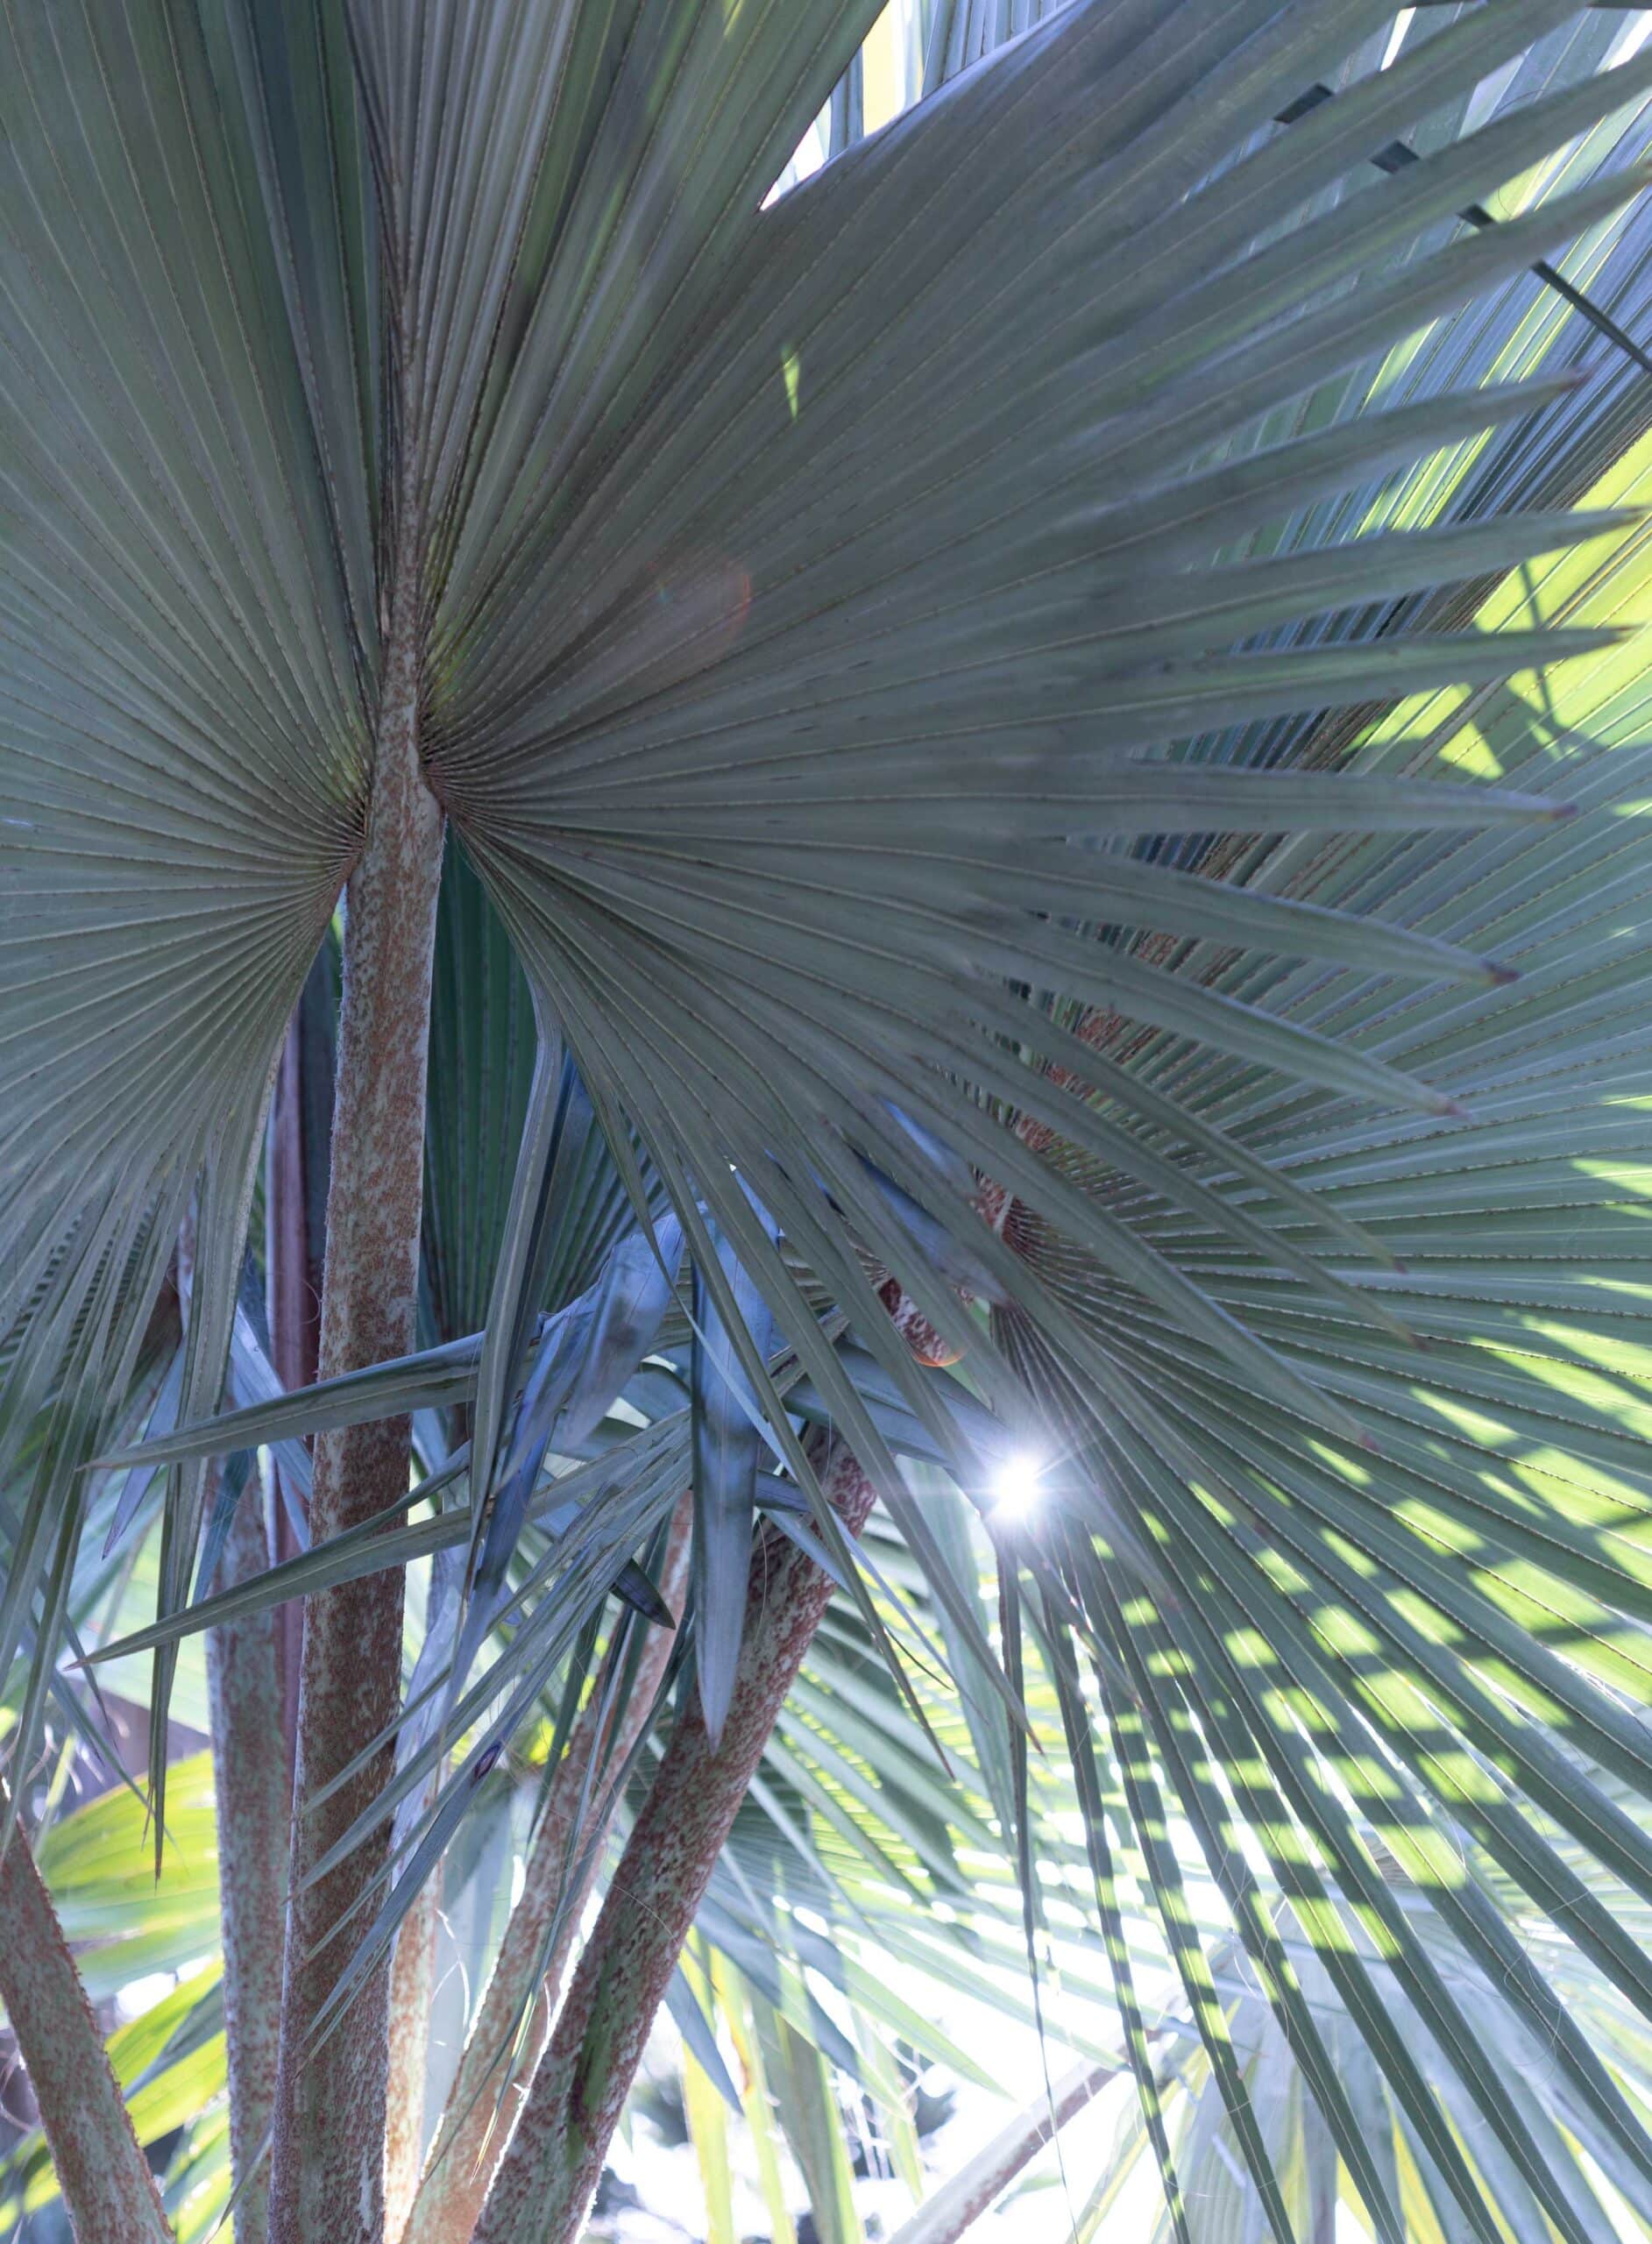 Bismarck Palm